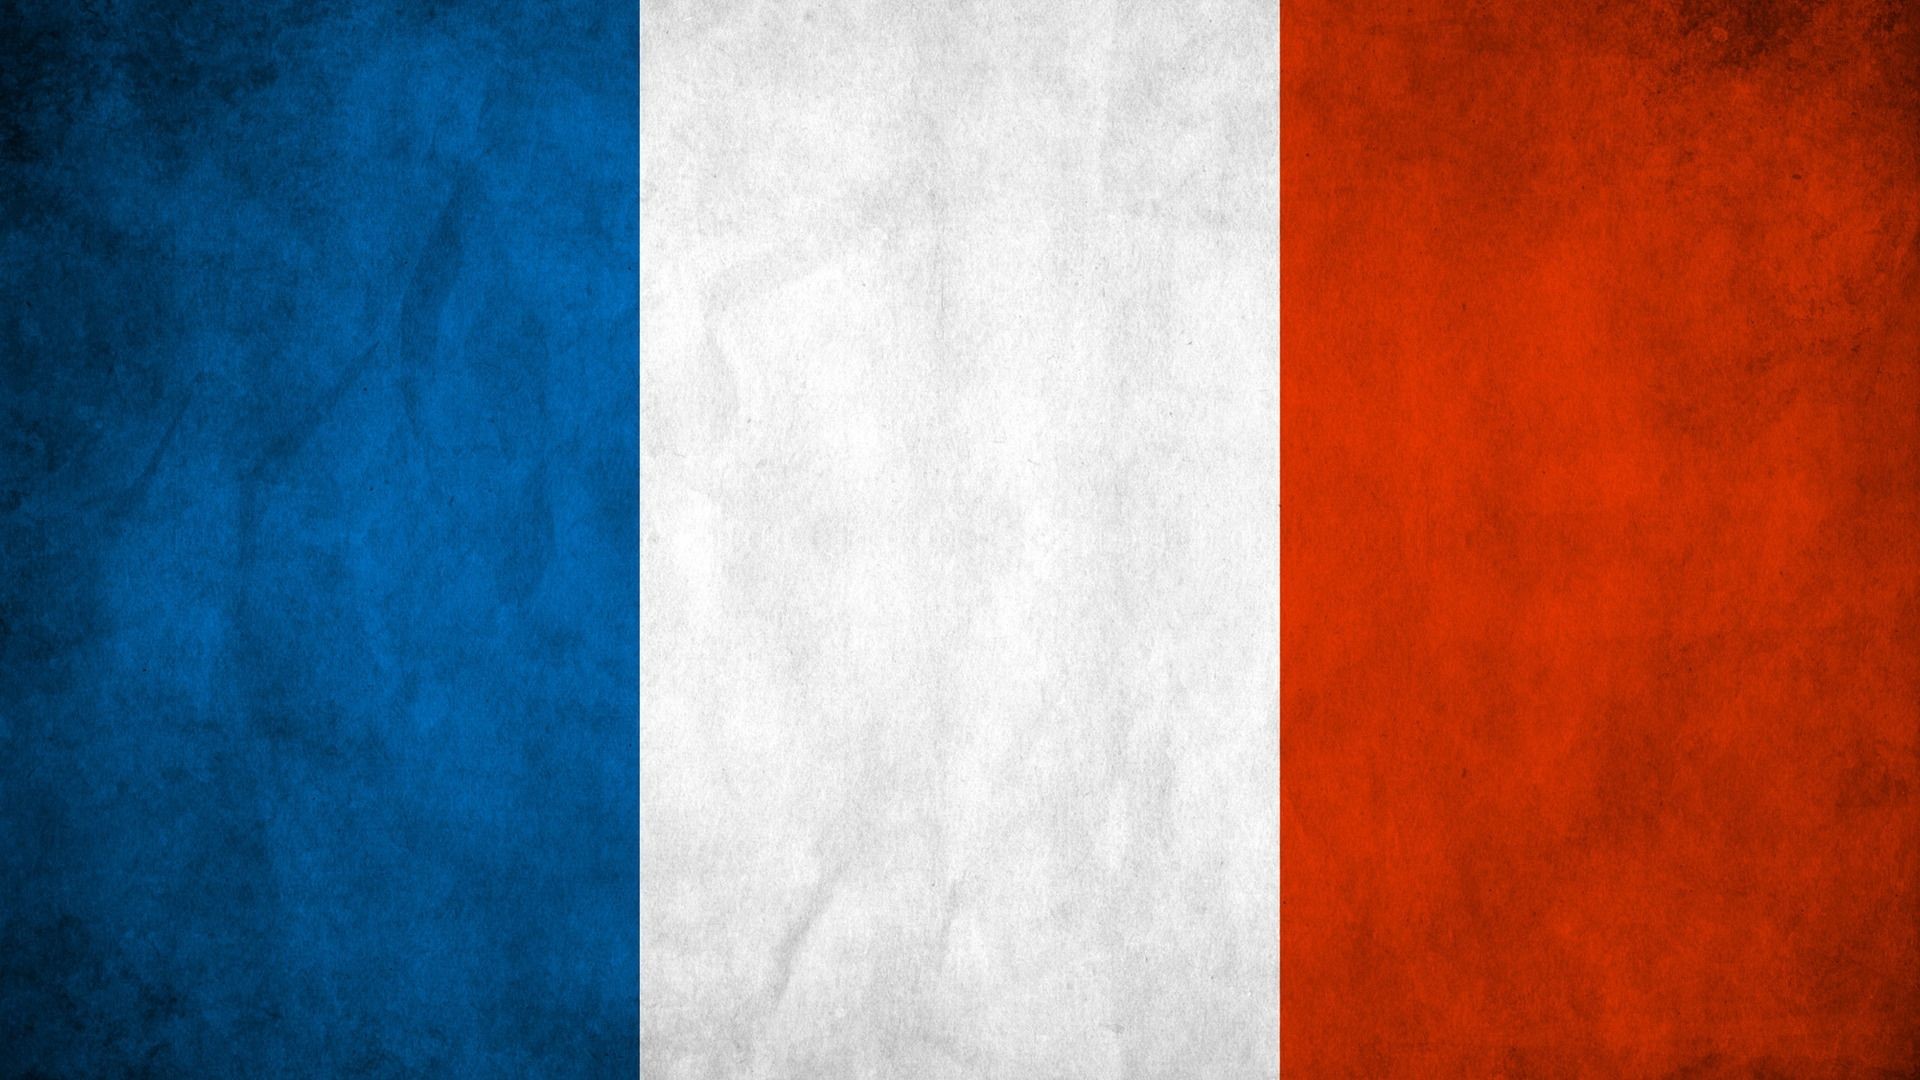 1920x1080 hd french flag image amazing images 1080p smart phone background .